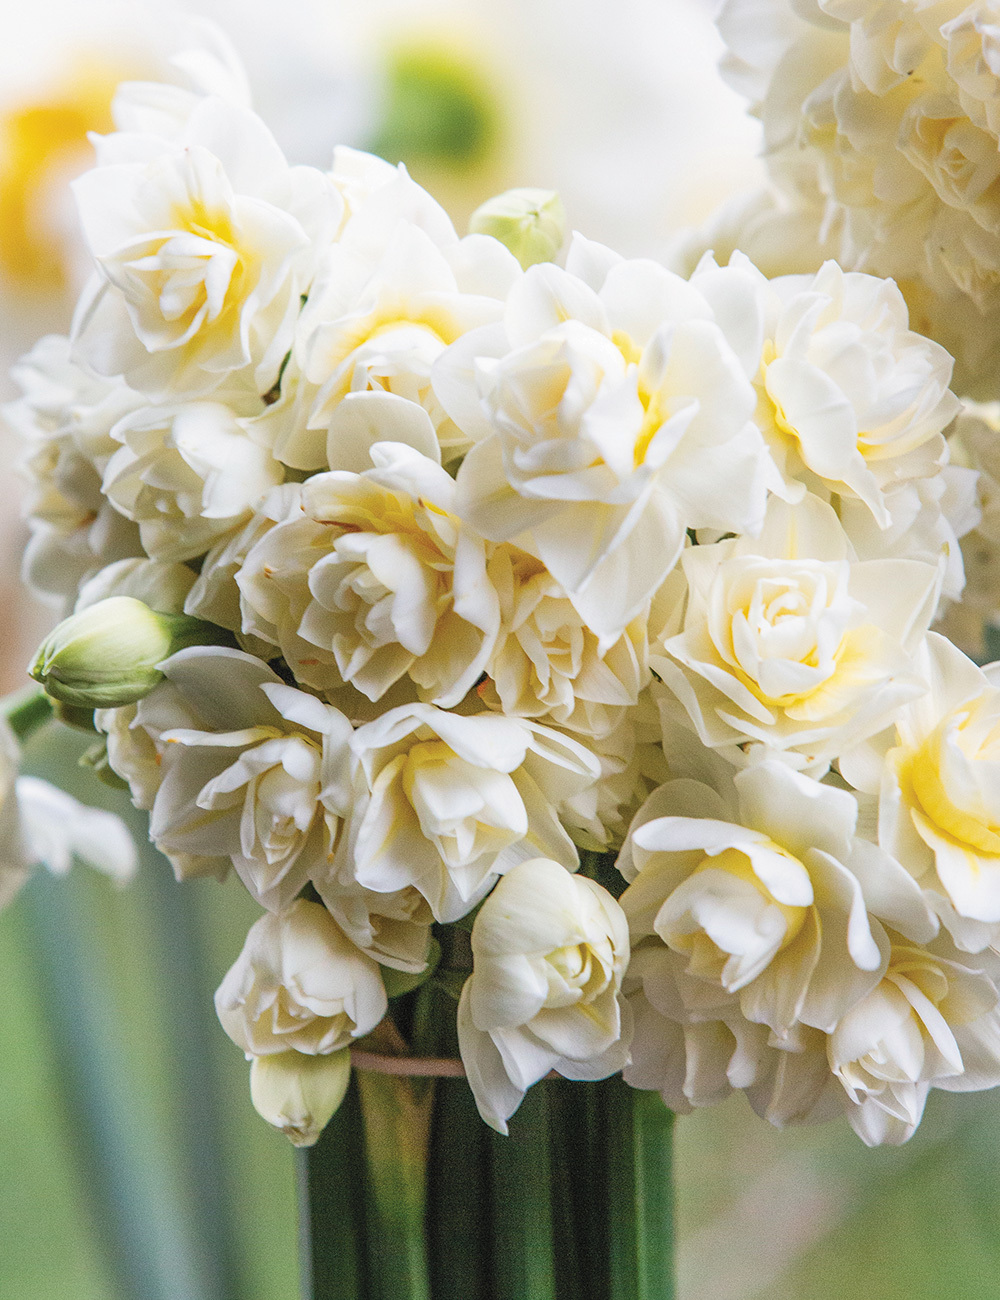 Scented Daffodil 'Erlicheer'